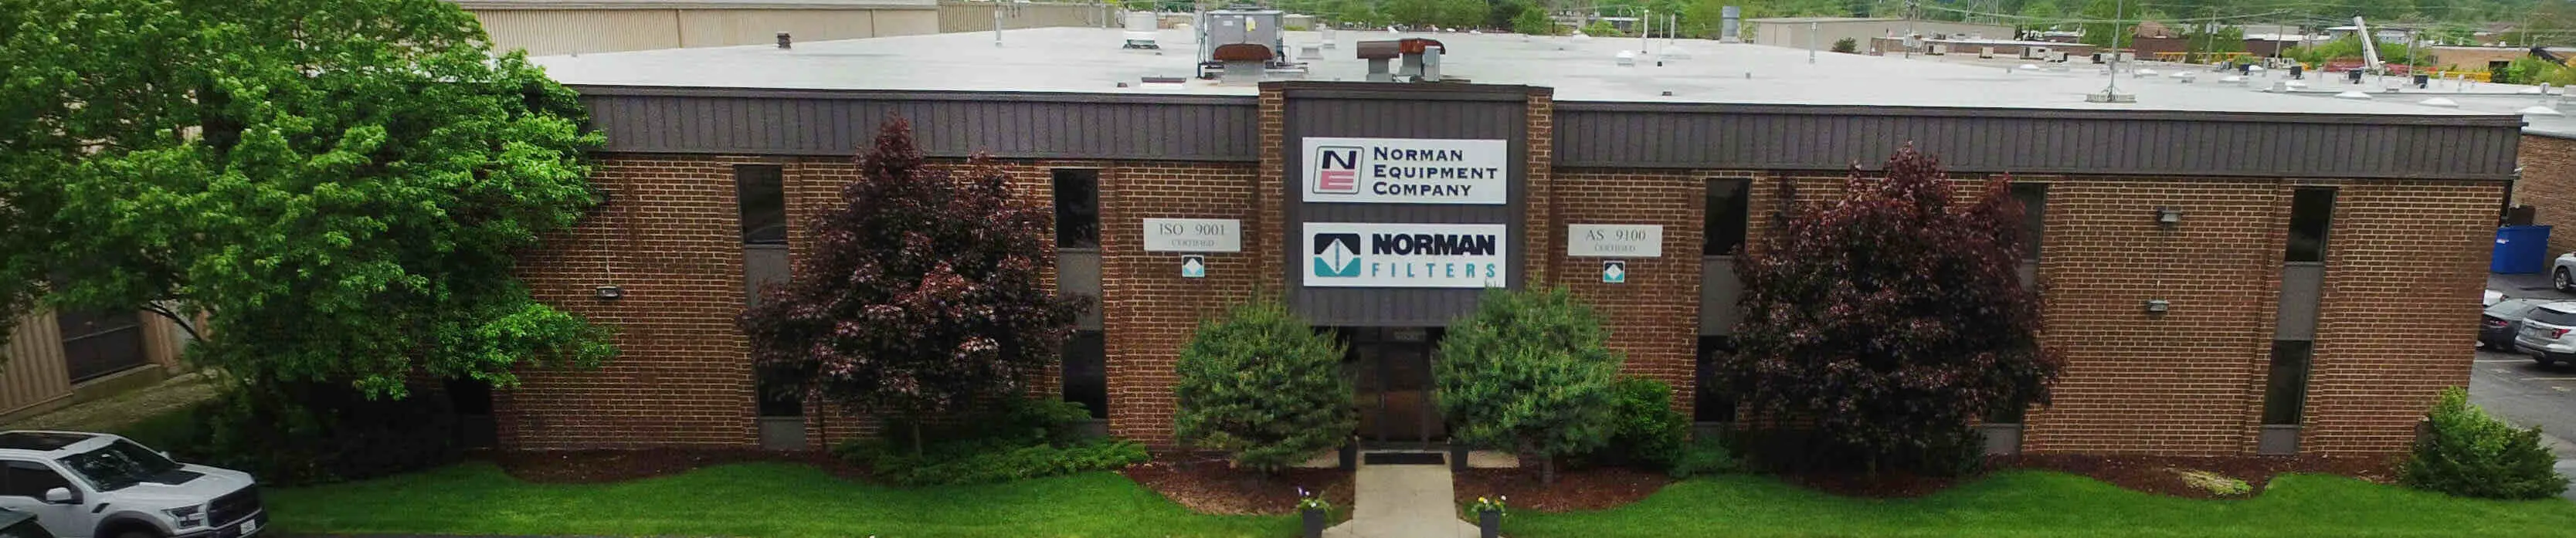 Norman Equipments Building - Norman Equipment